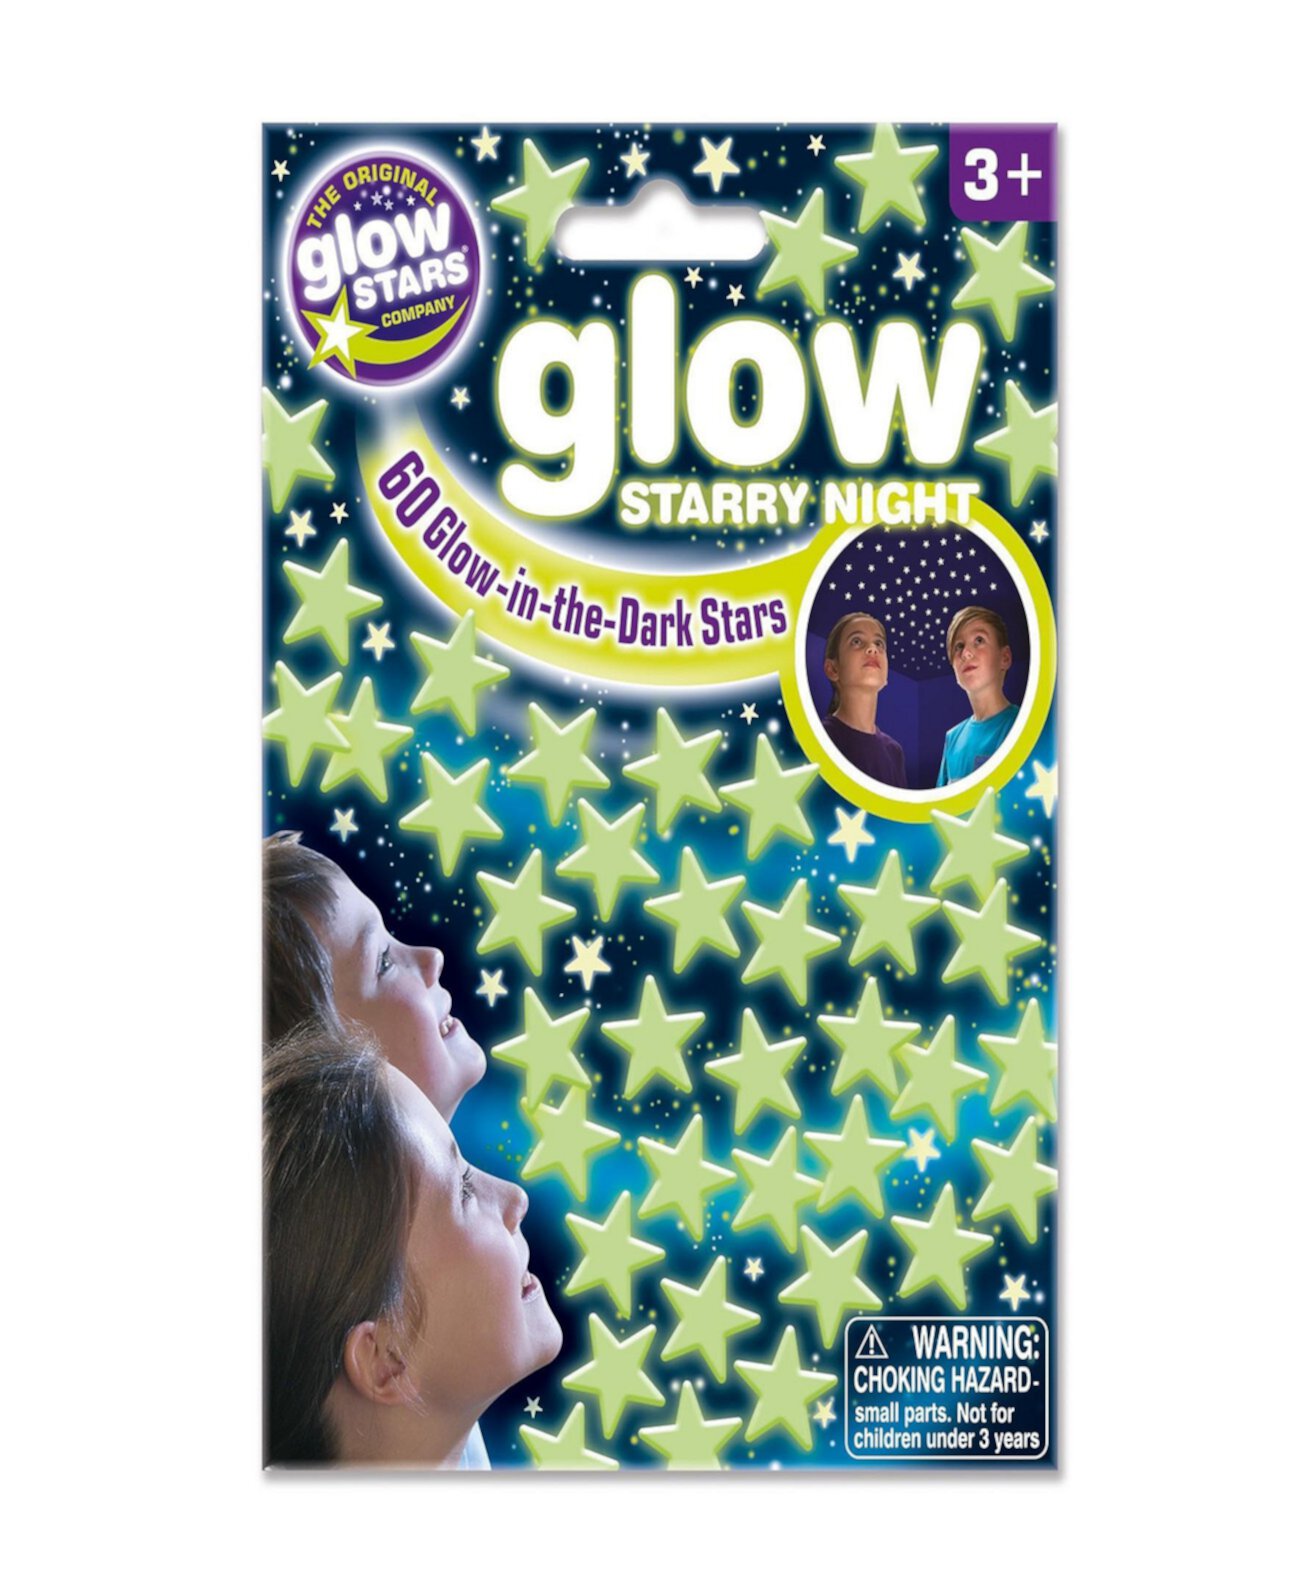 The Original Glowstars Glow Starry Night Craft kit Brainstorm Toys